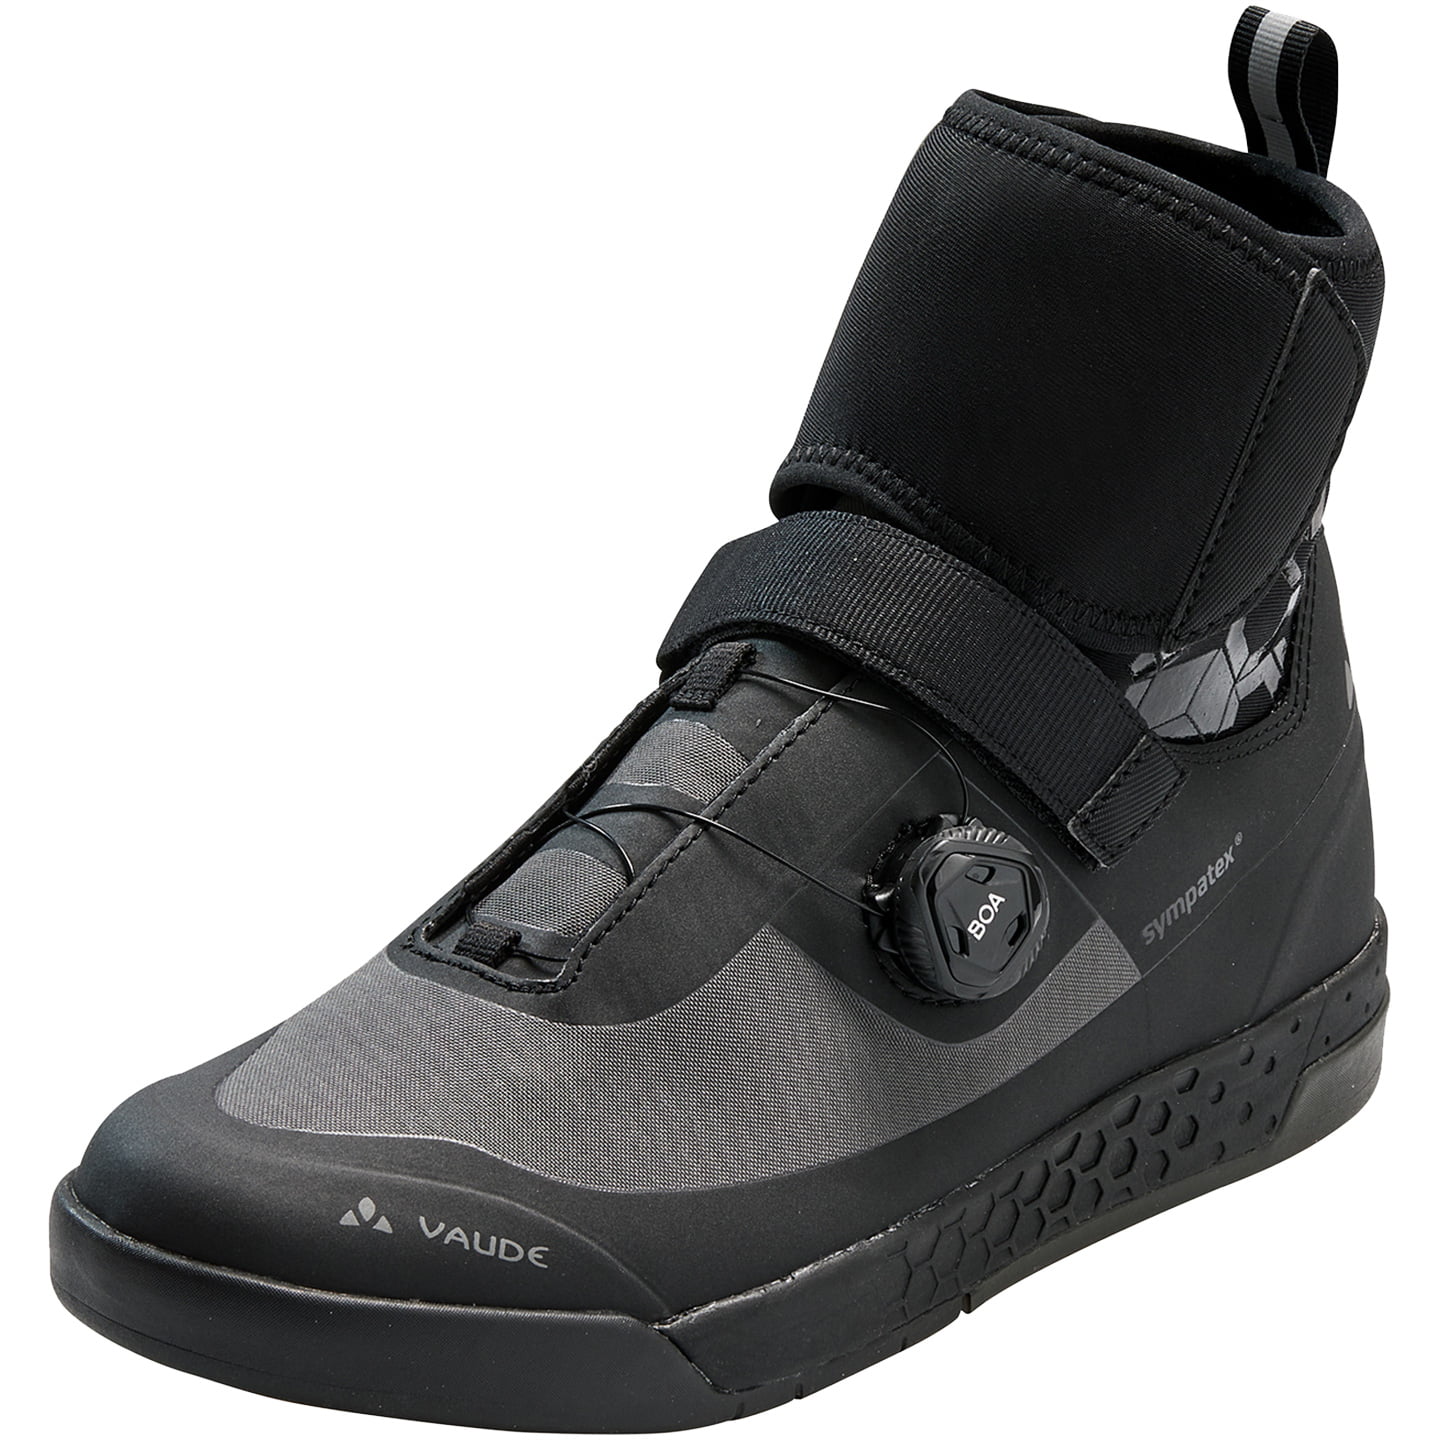 VAUDE AM Moab Mid STX Flat Pedal Winter Shoes, for men, size 46